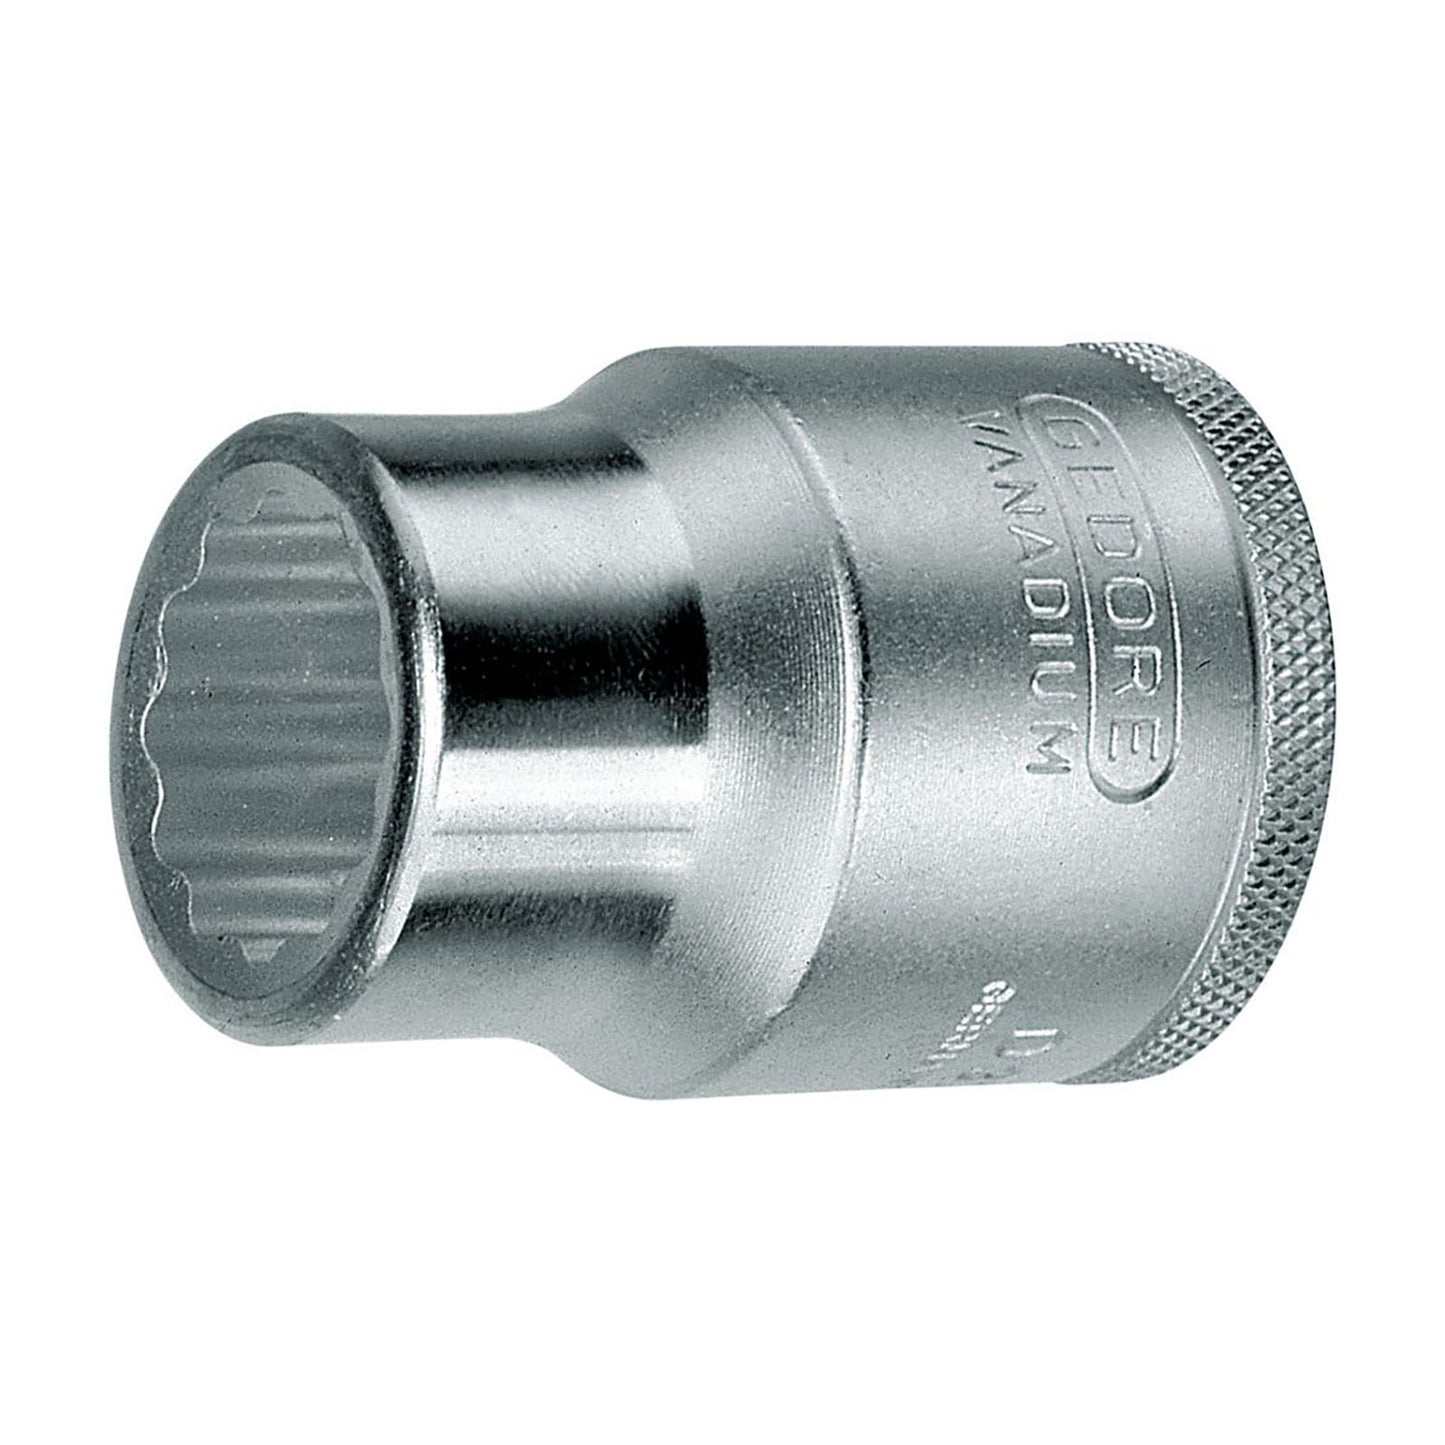 GEDORE D 32 60 - Vaso Unit Drive 3/4", 60 mm (6273560)